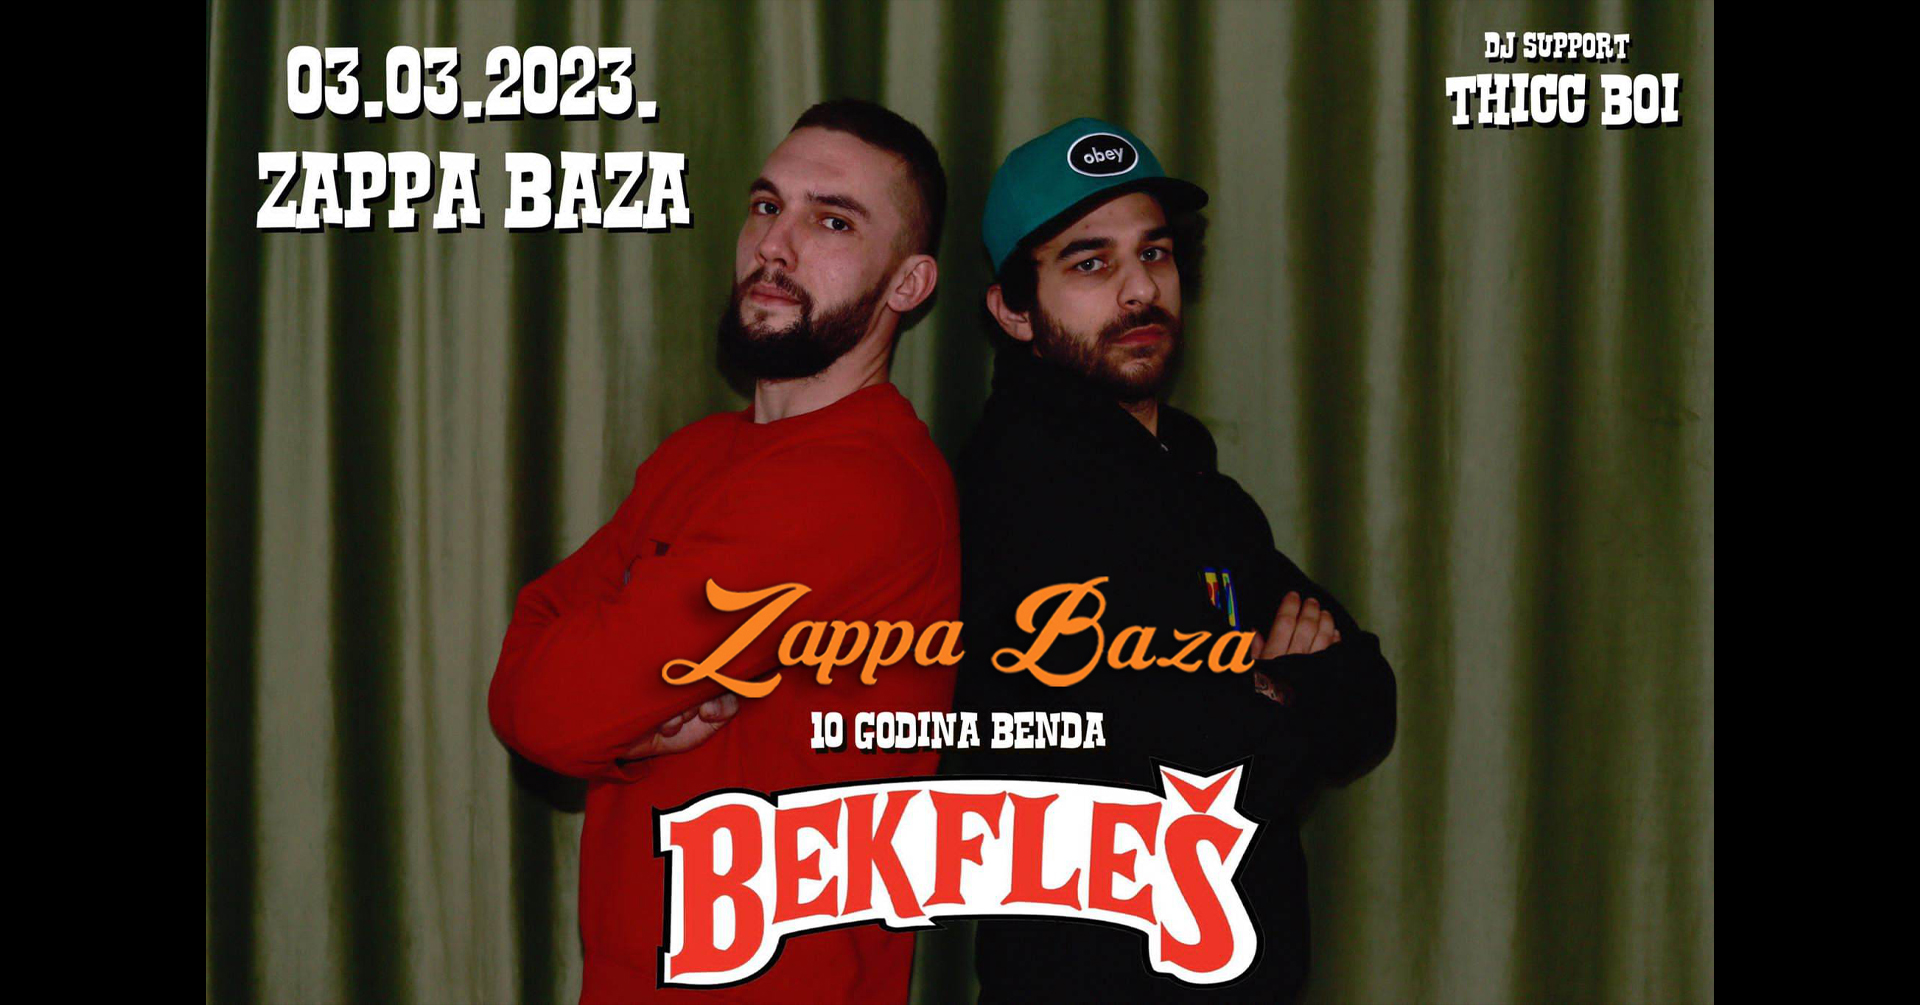 10 godina kultnog NS trep benda Bekfleš u Zappa Bazi